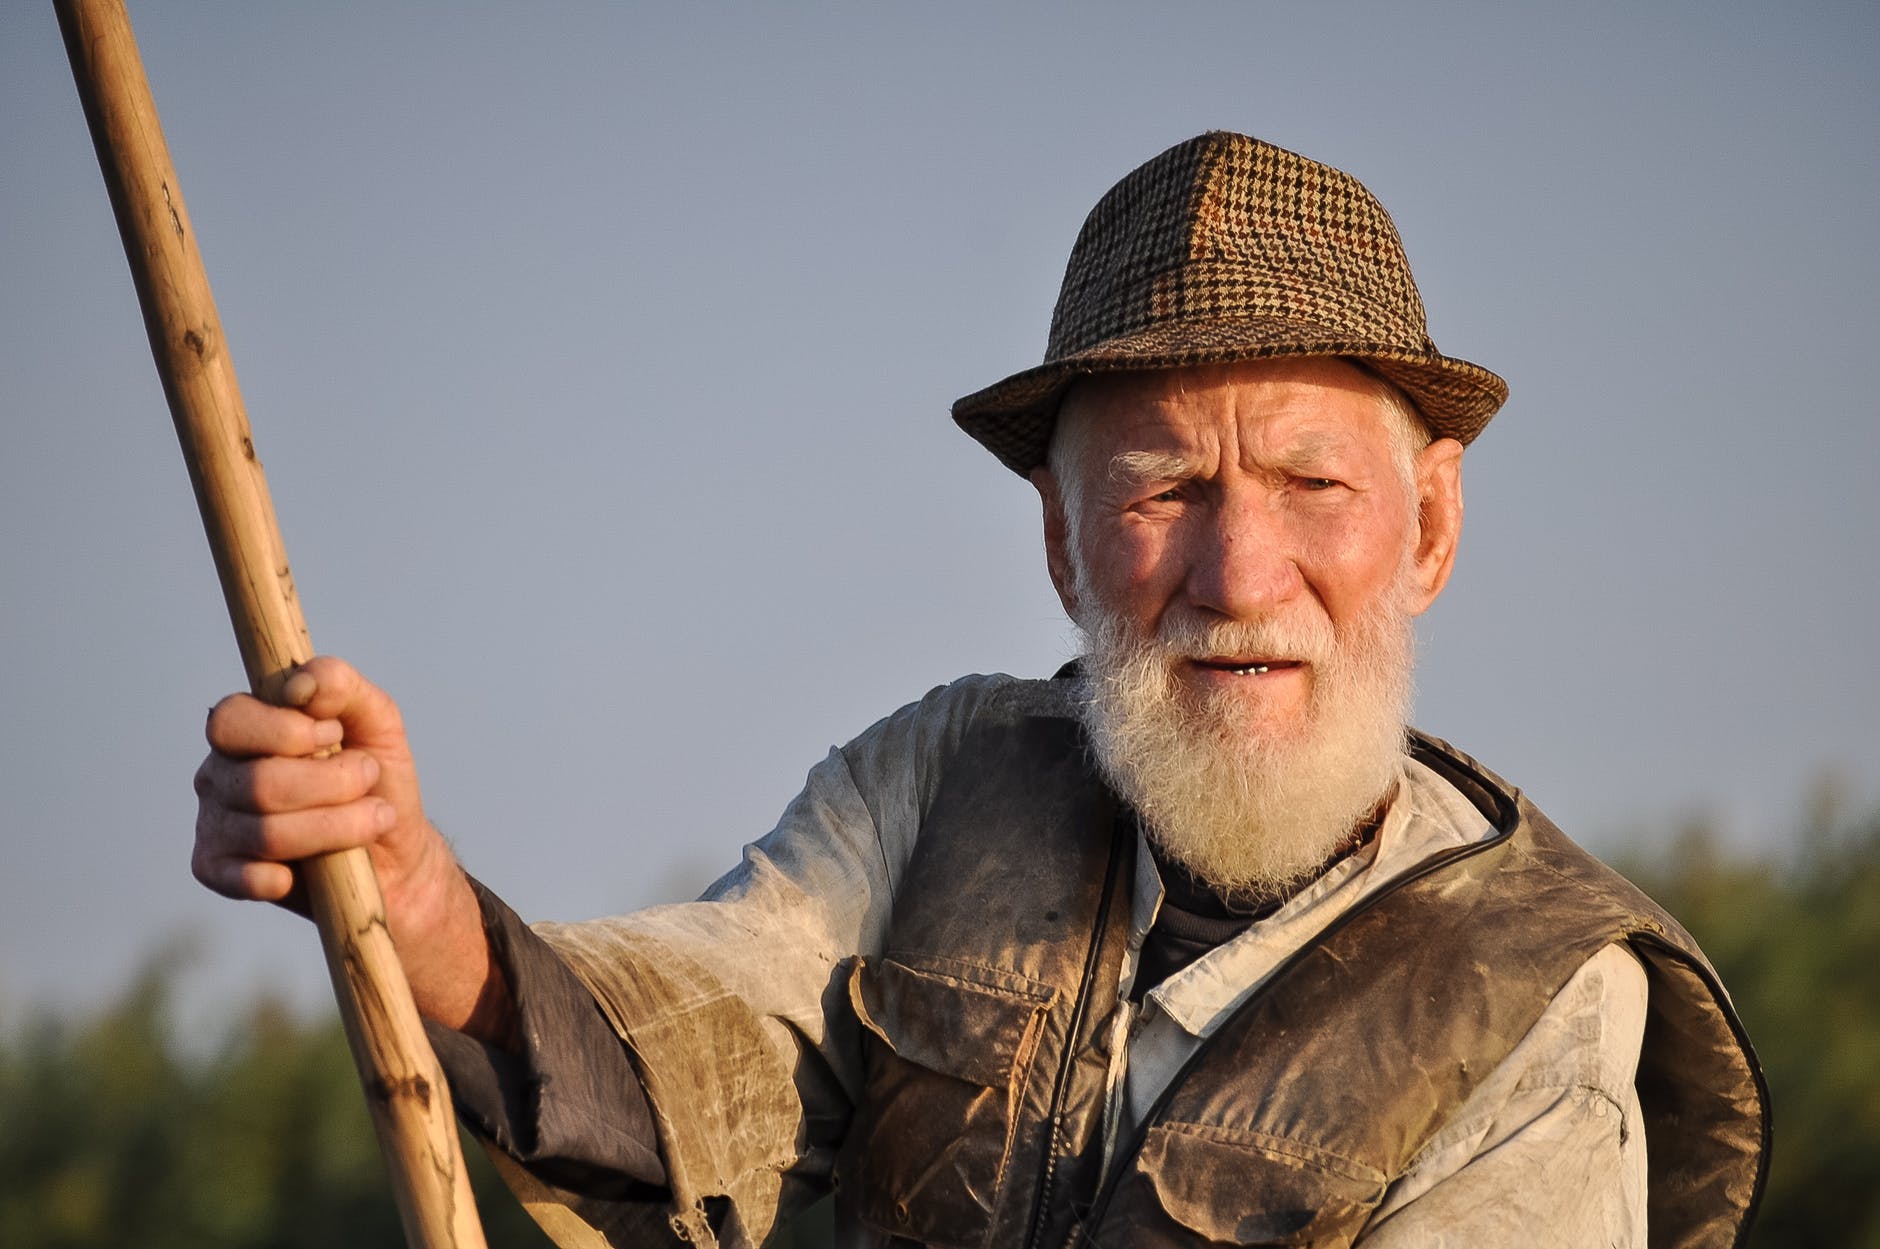 man wearing hat holding wooden rod under gray sky